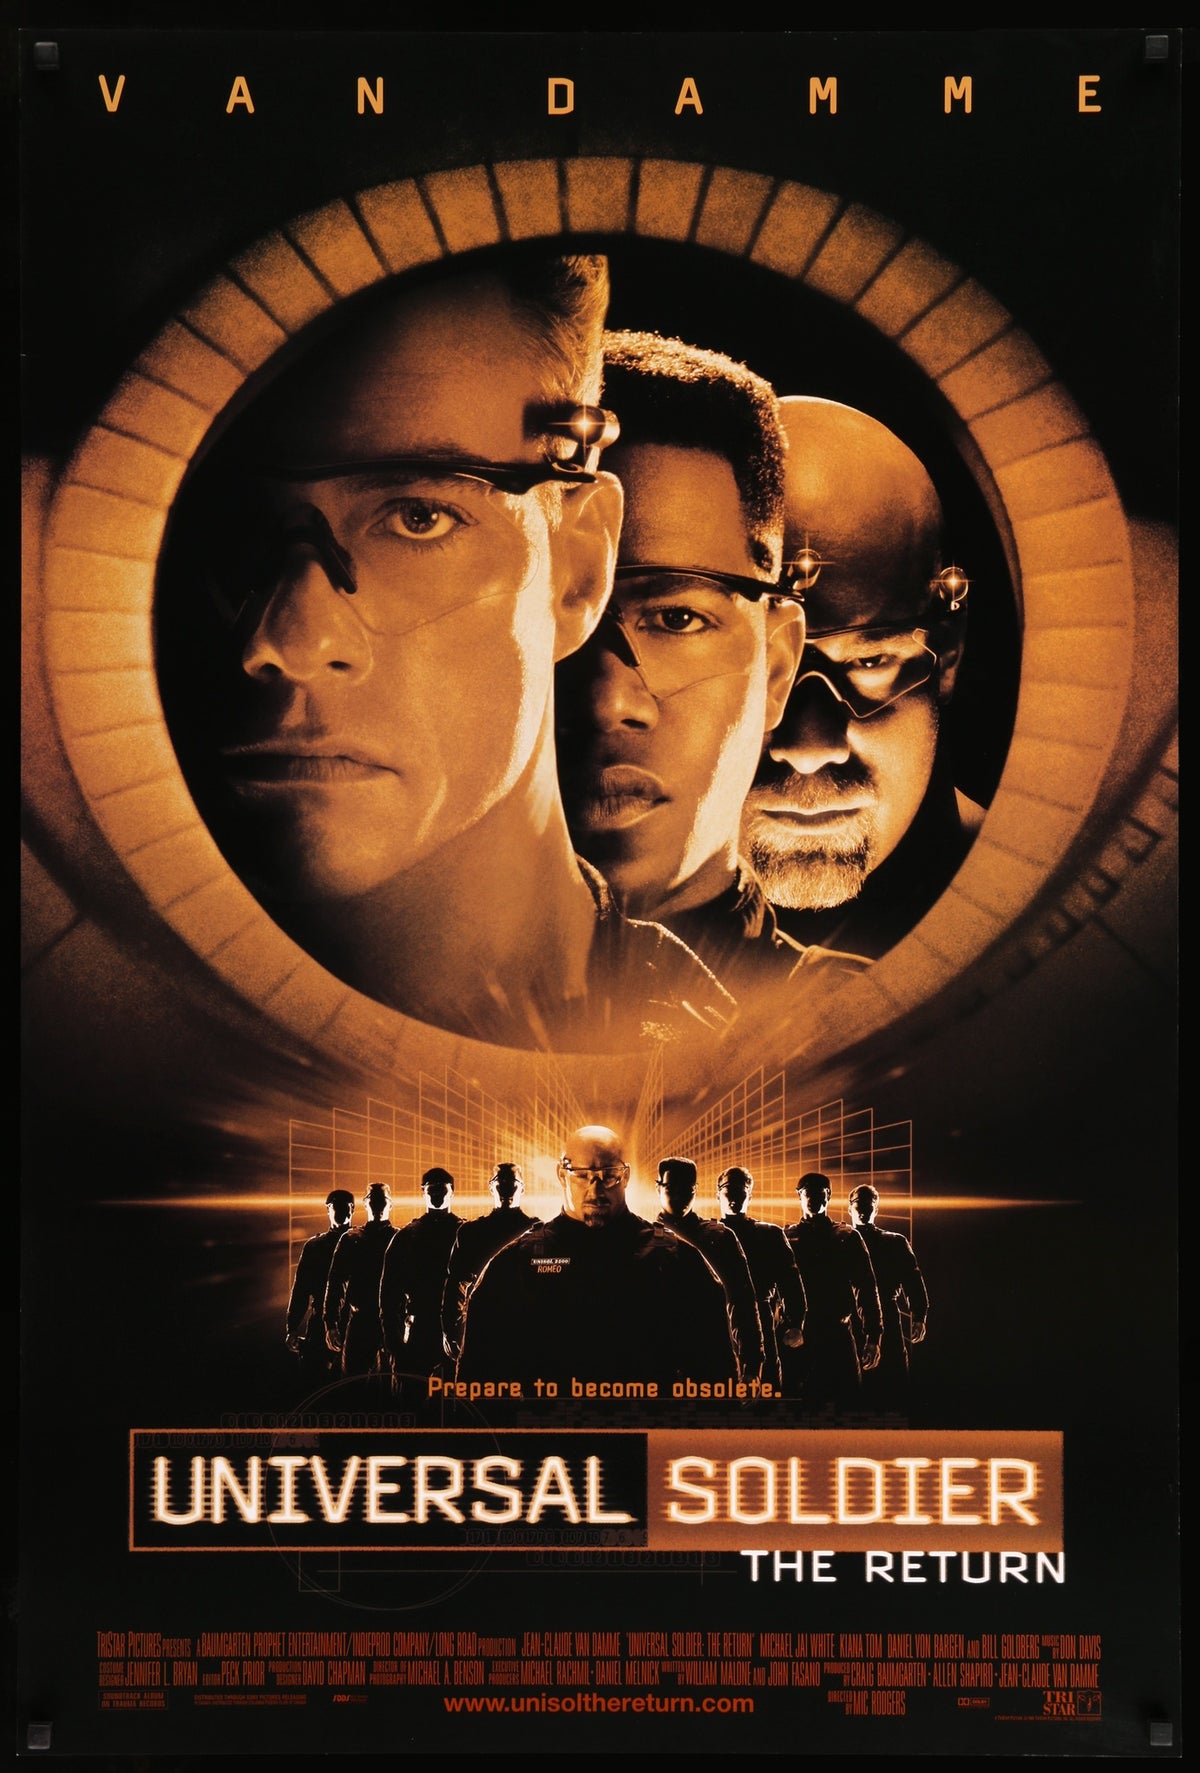 Universal Soldier: The Return (1999) original movie poster for sale at Original Film Art